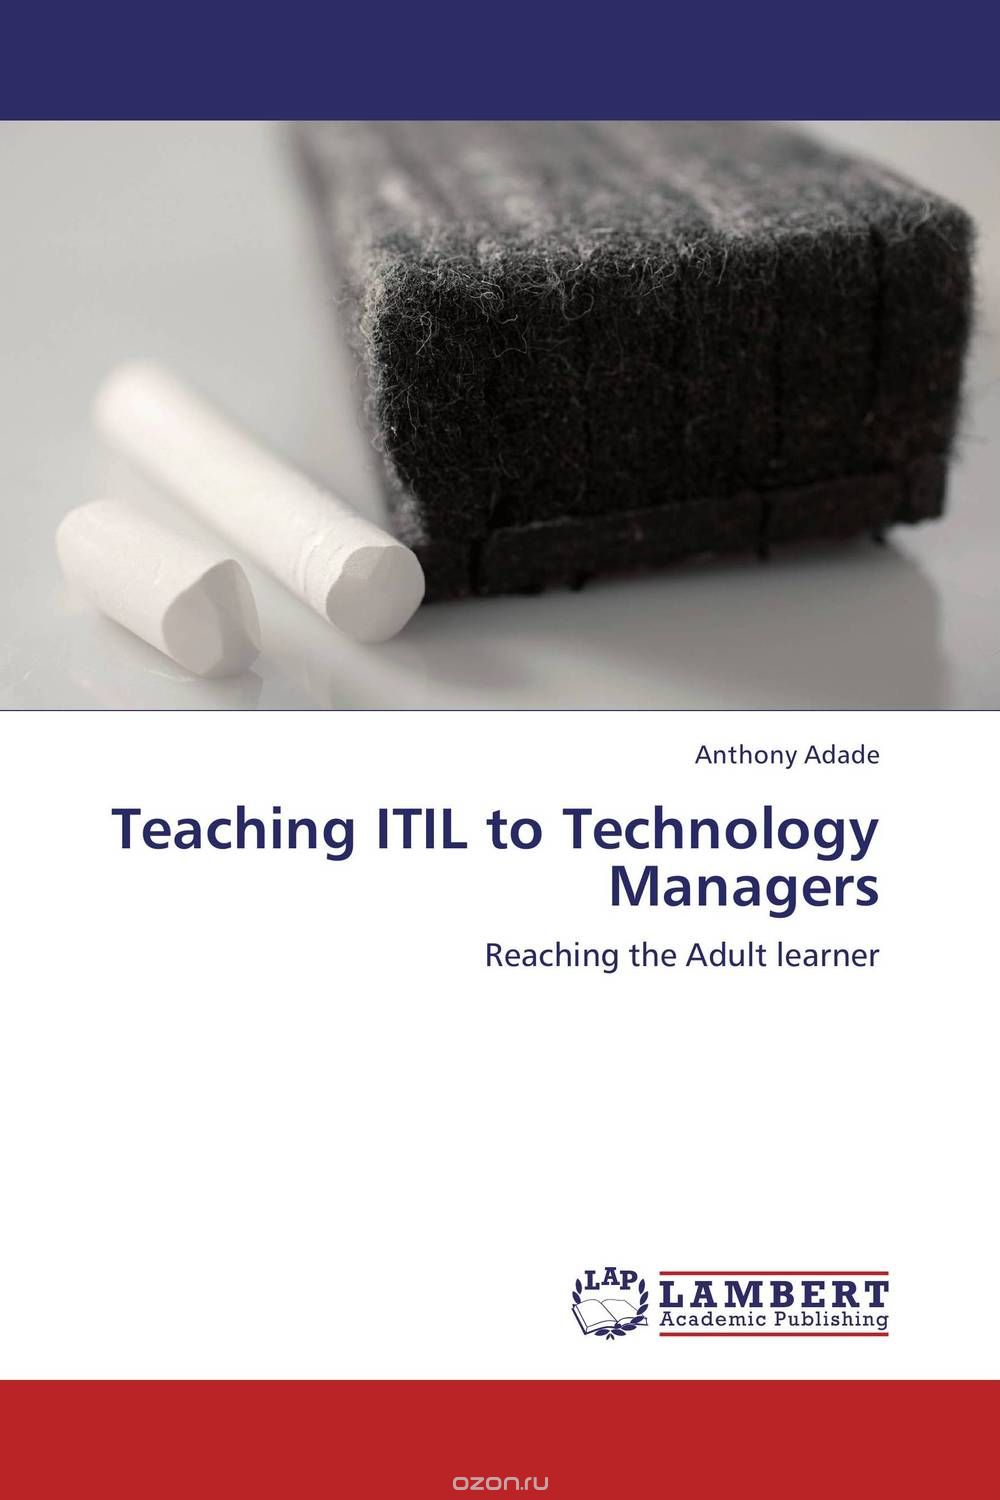 Скачать книгу "Teaching ITIL to Technology Managers"